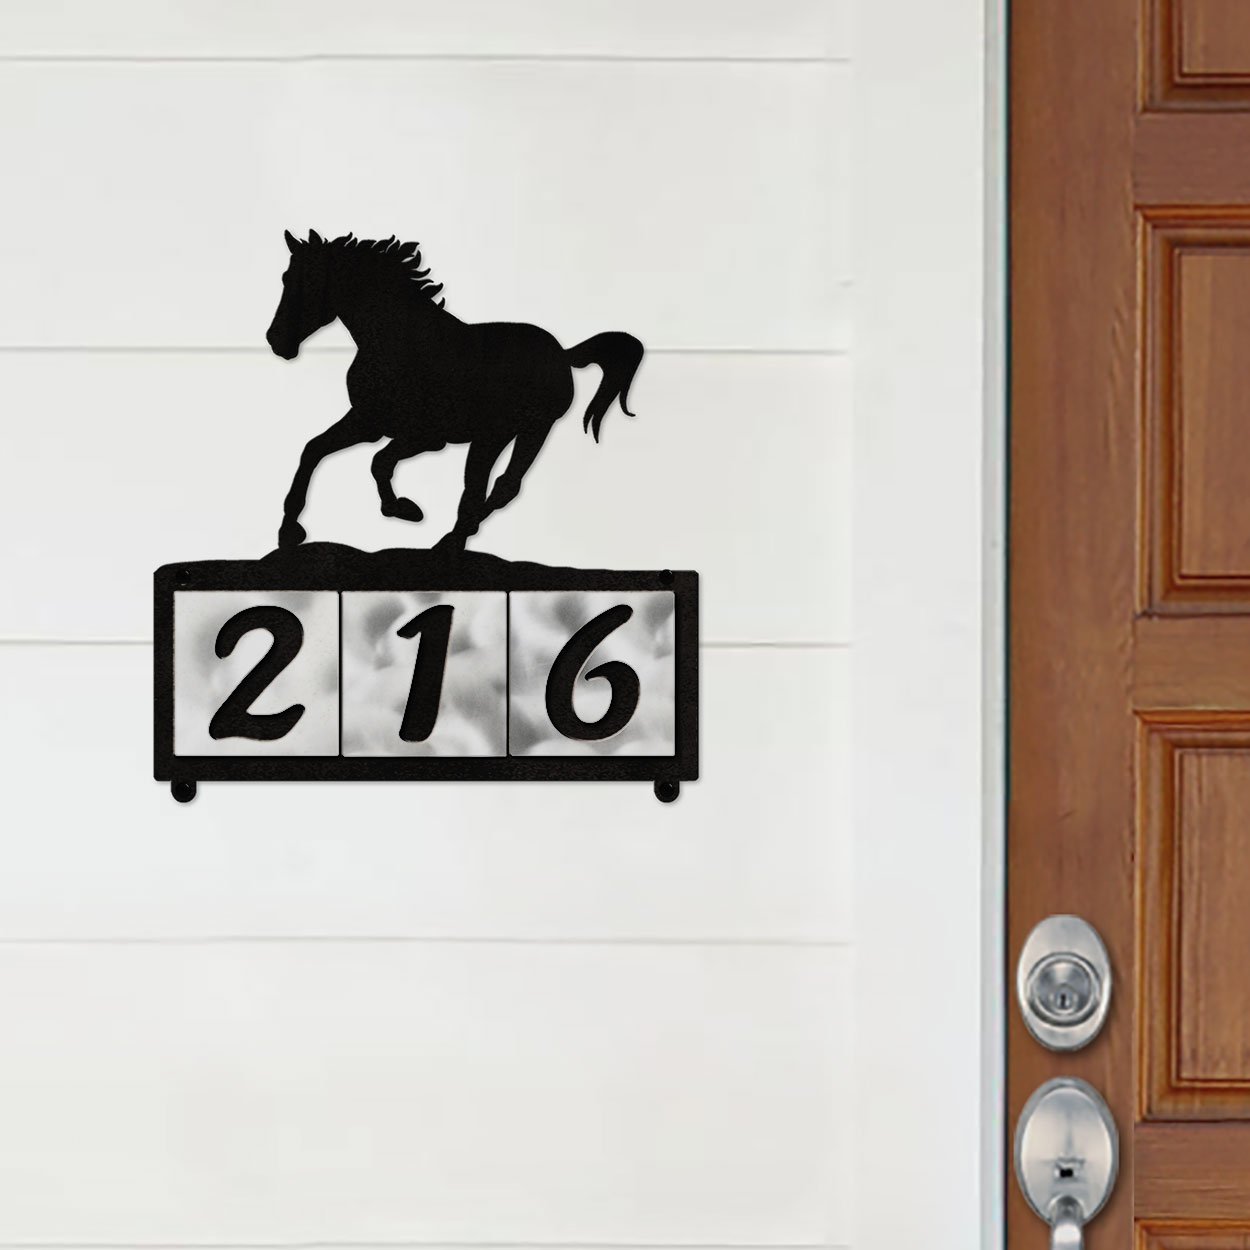 607103 - Running Horse Scene Design 3-Digit Horizontal 4-inch Tile Outdoor House Numbers